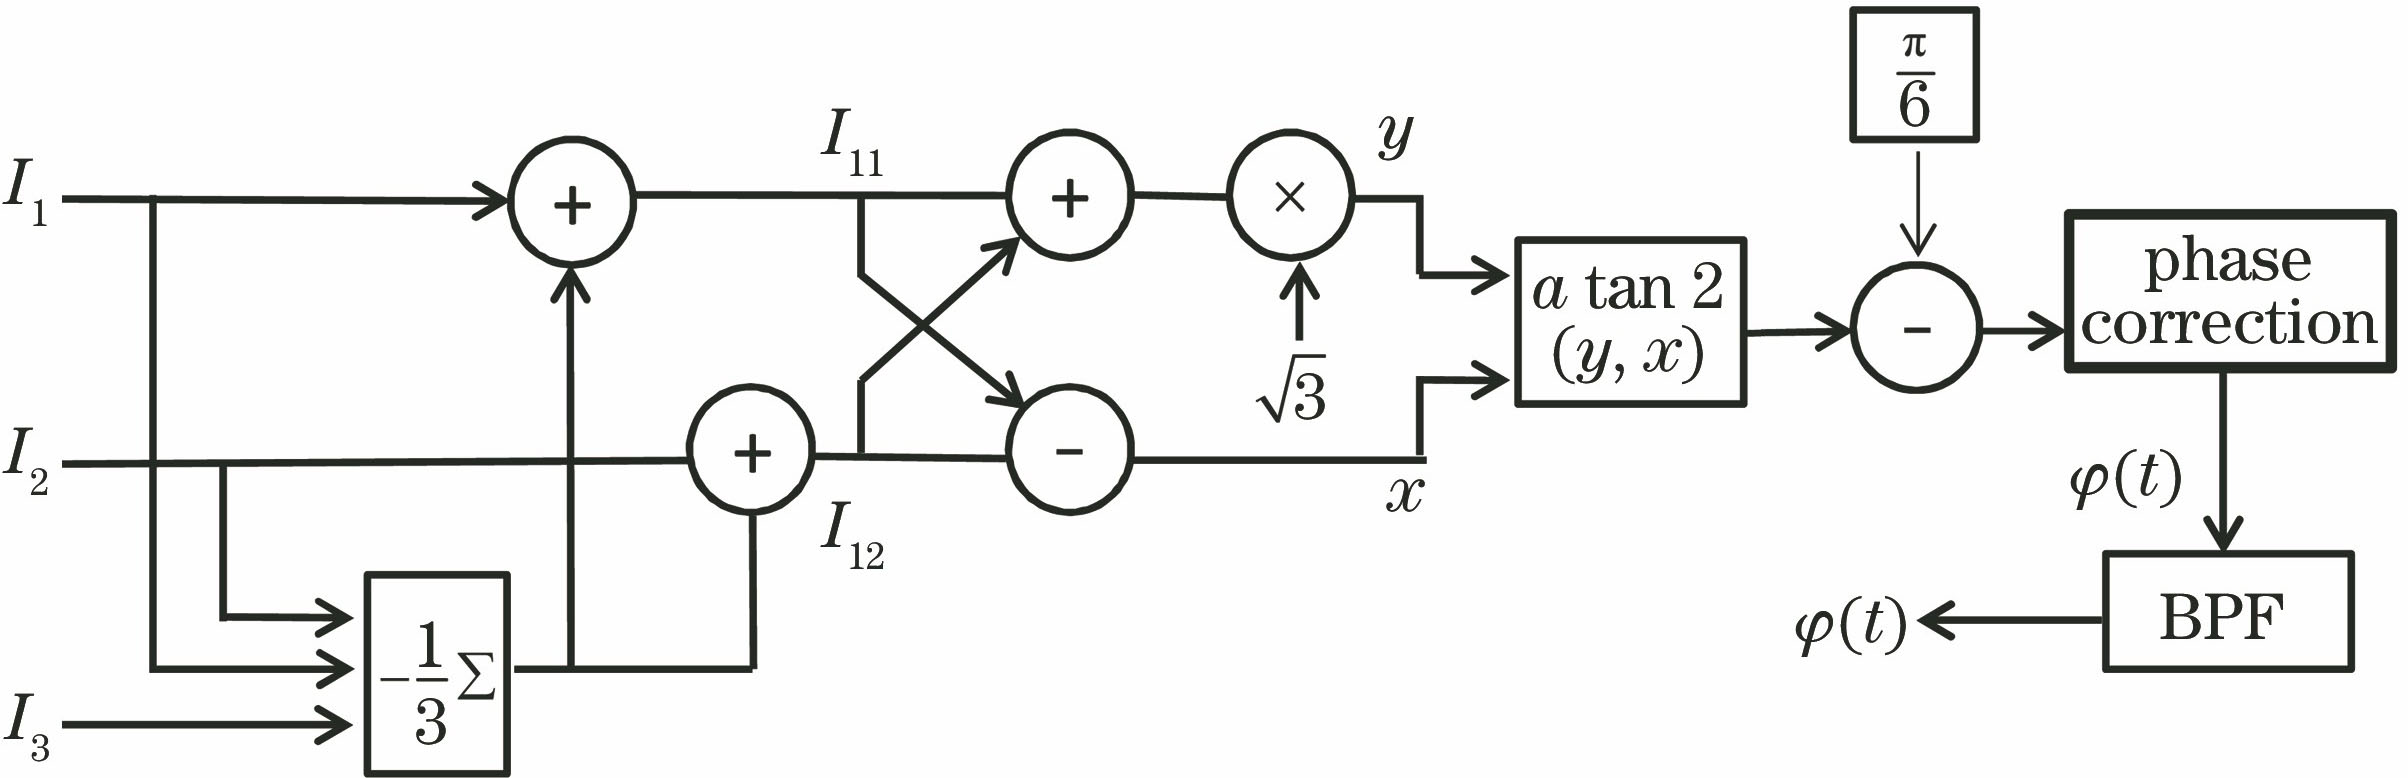 Schematic of arc-tangent demodulation algorithm